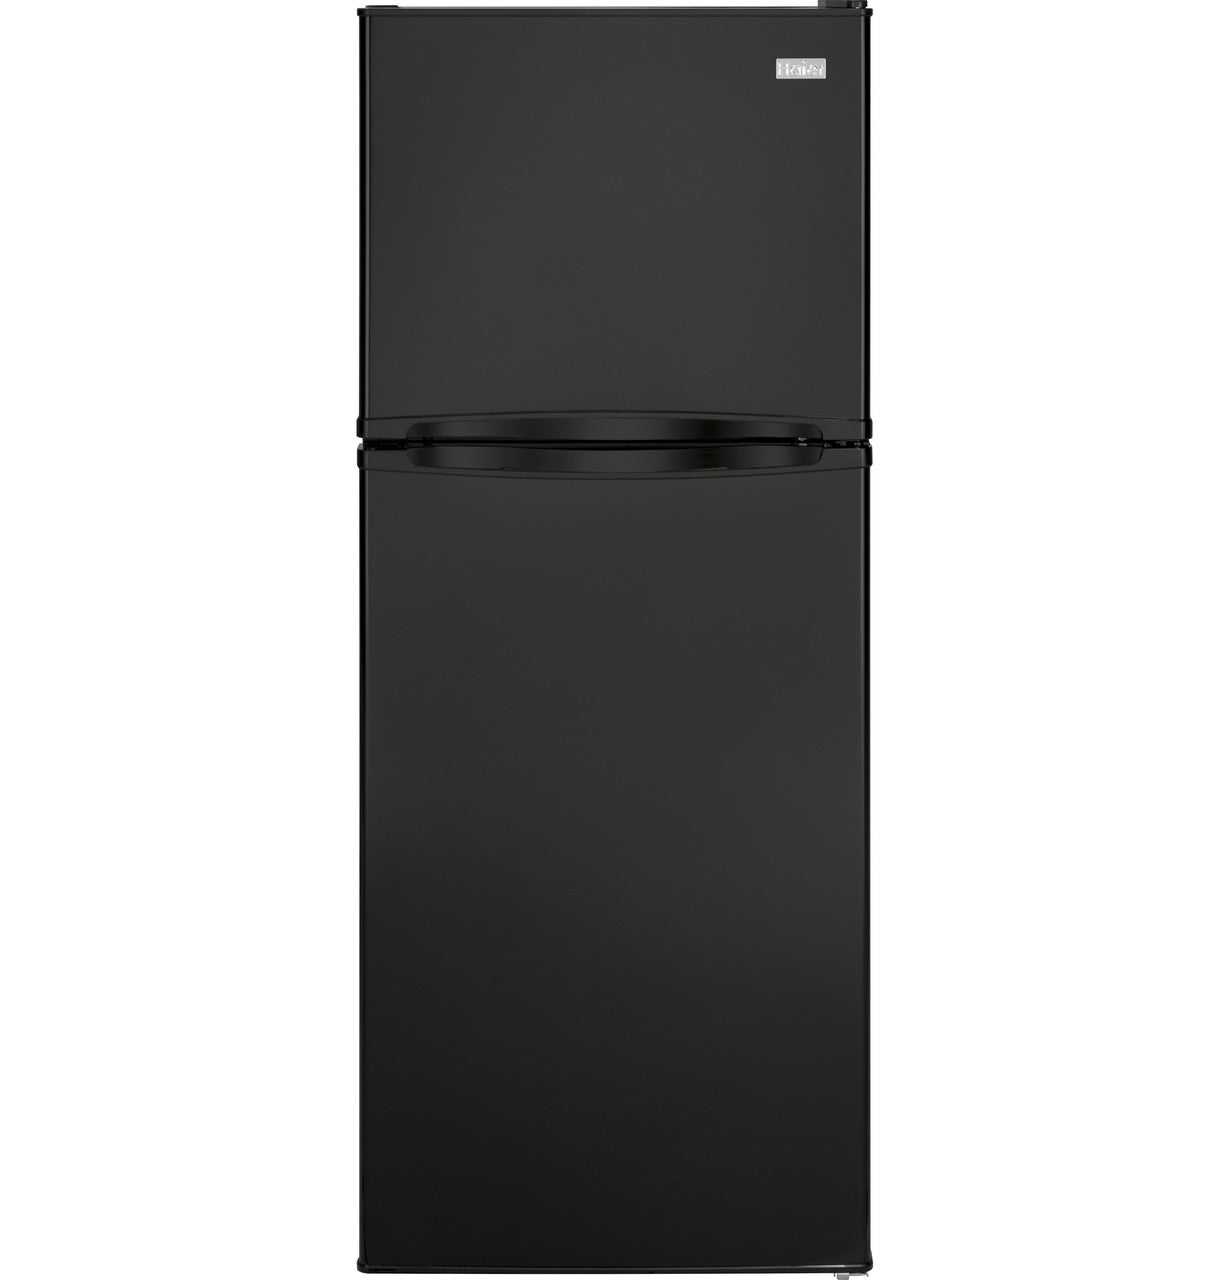 GE Haier HA10TG21SB Top-Freezer Refrigerator 9.8 Cu. Ft. with 1-Year Warranty